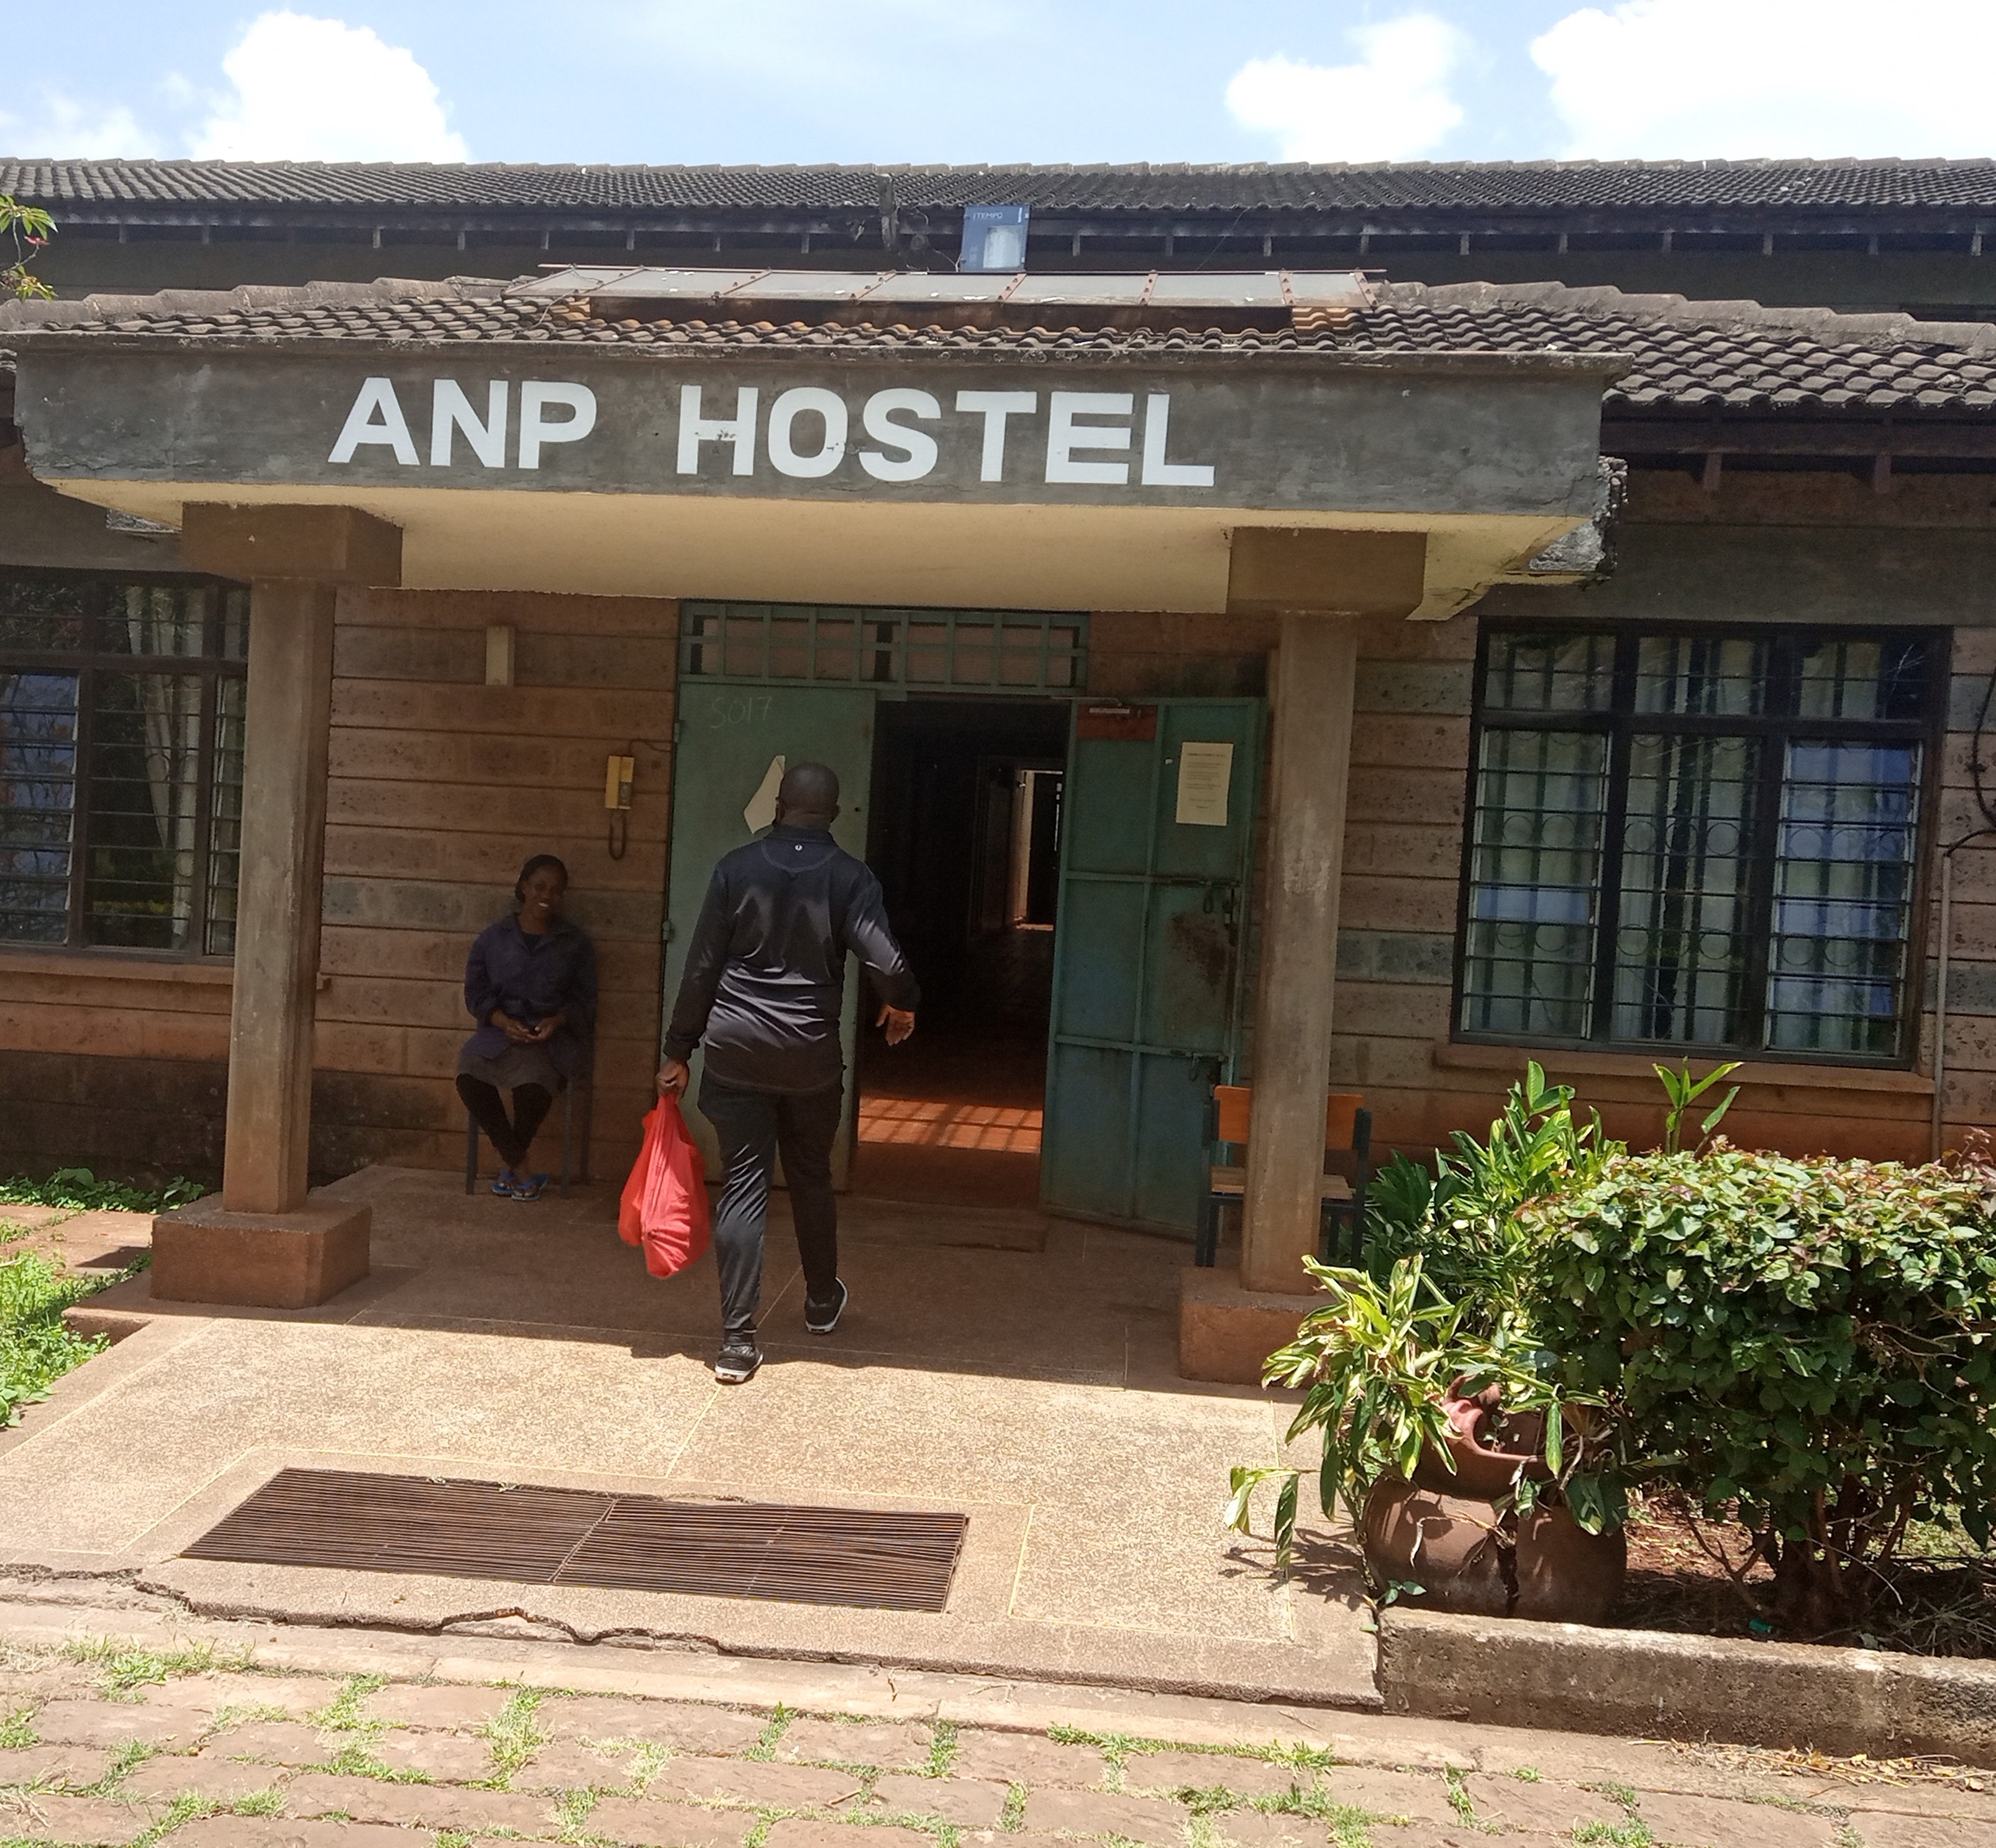 ANP hostels for international students